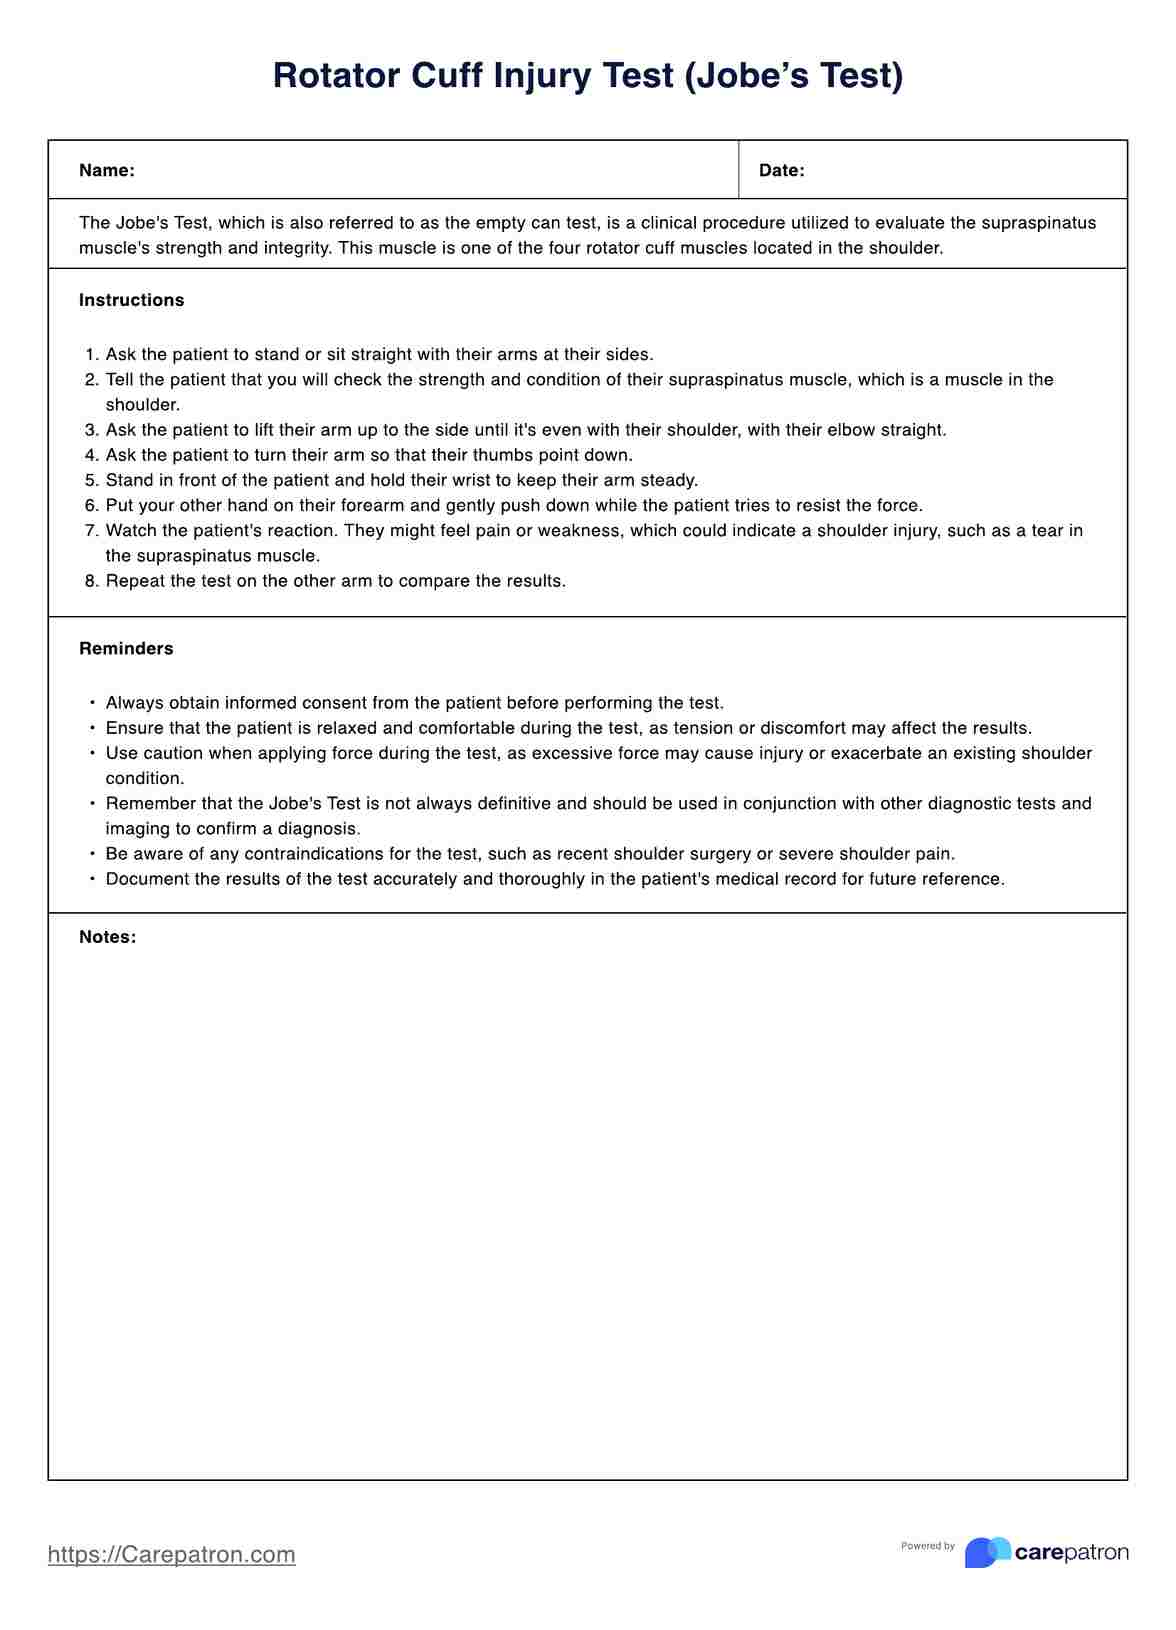 Rotator Cuff Injury Test (Jobe's Test) PDF Example